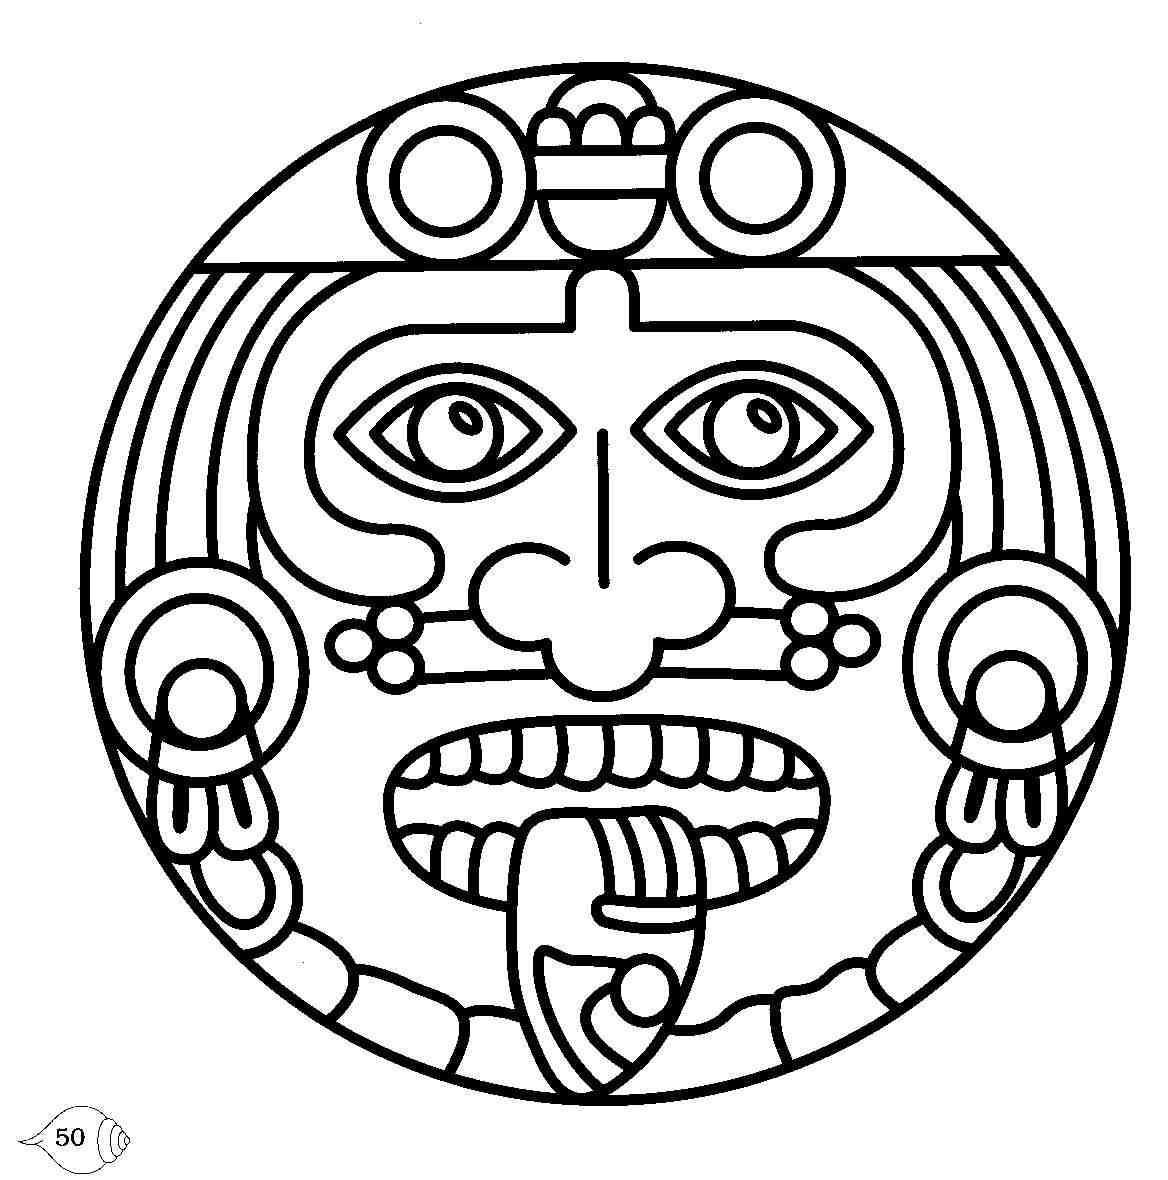 Aztec symbols, apps for editing photos free